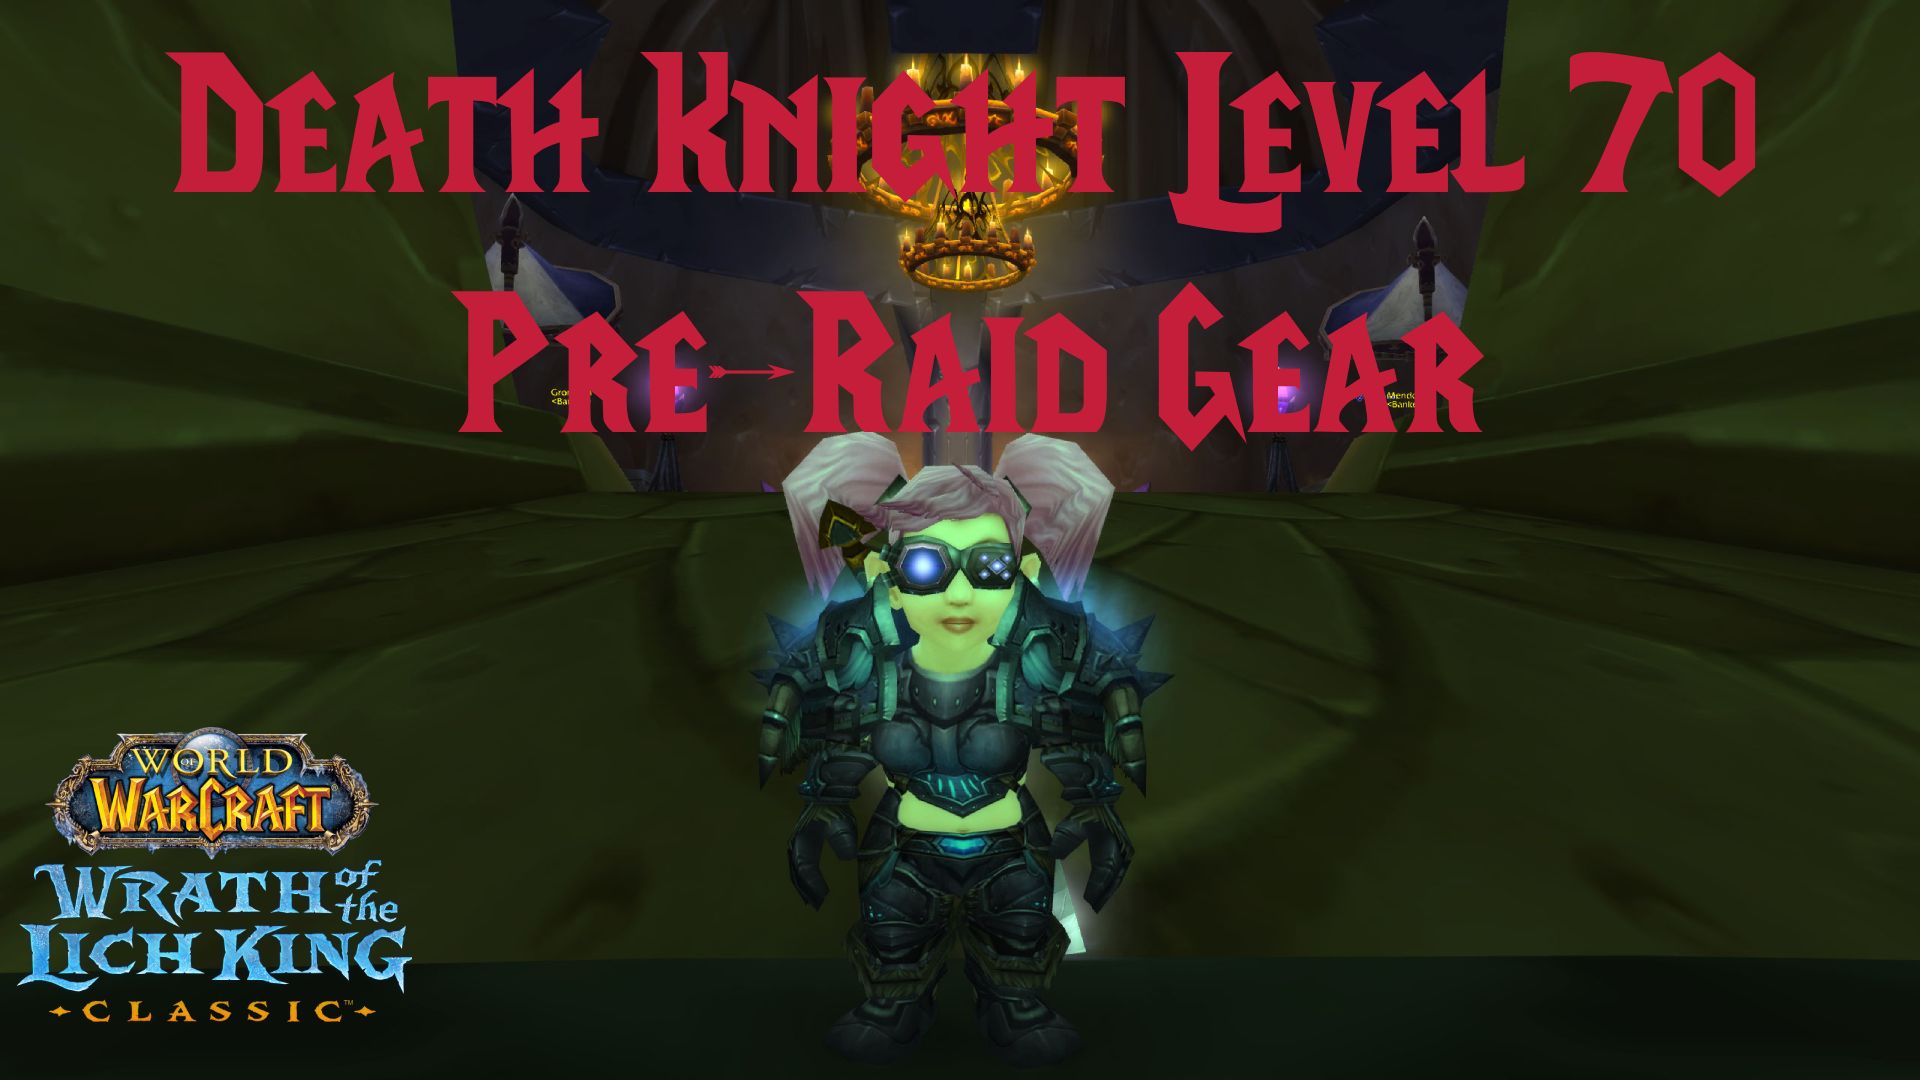 https://bittsguides.com/wp-content/uploads/2022/07/Death-Knight-Level-70-Pre-Raid-Gear.jpg